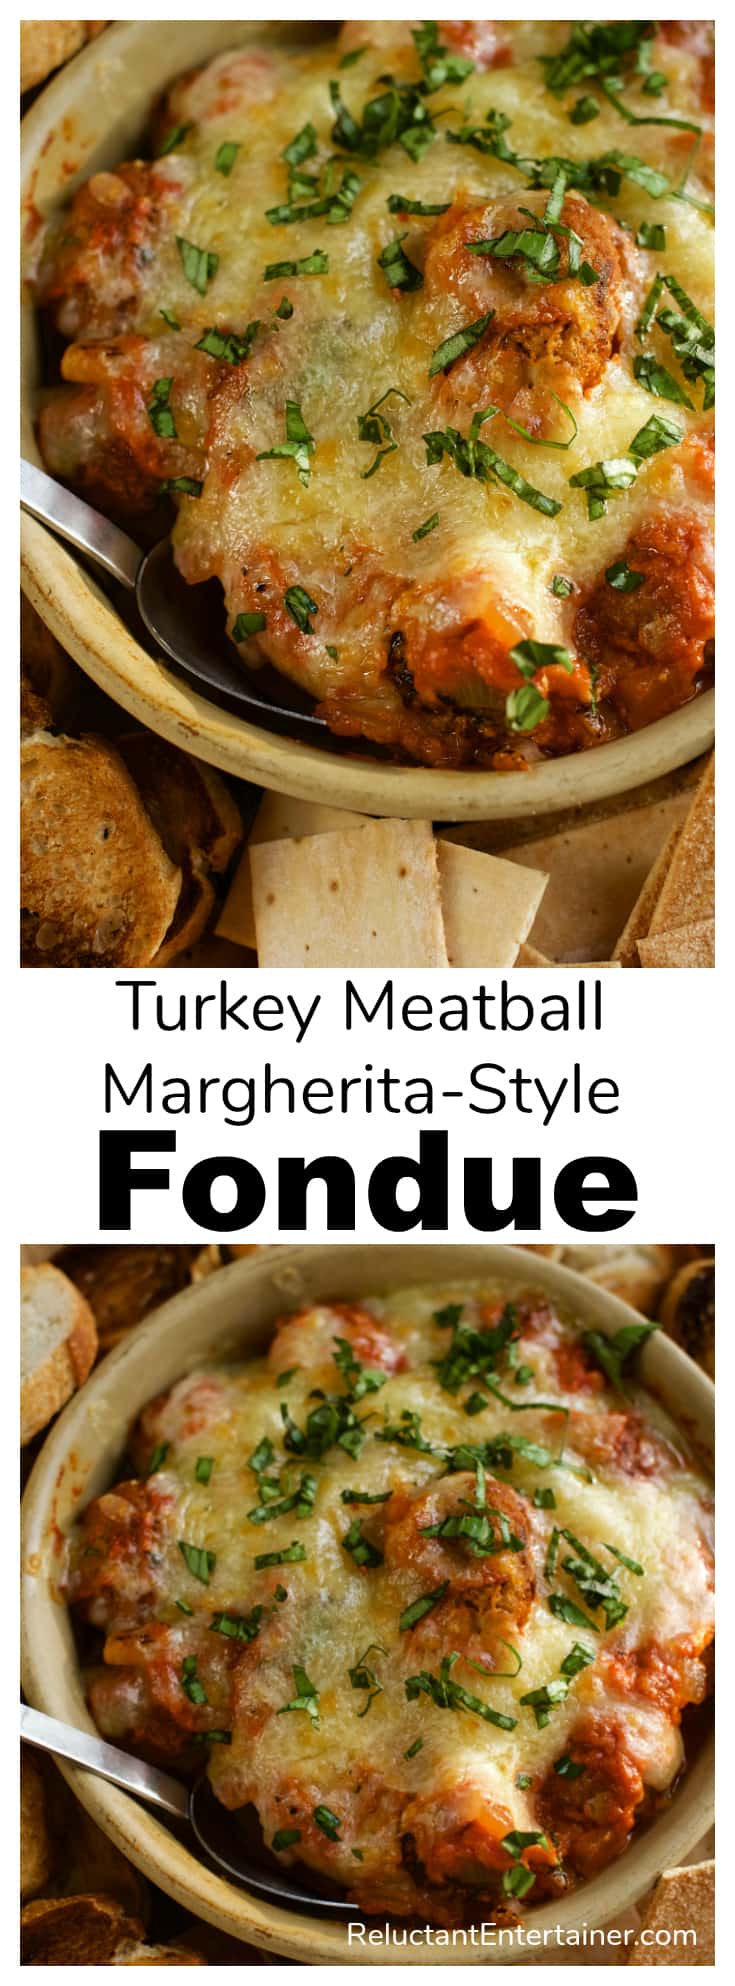 Turkey Meatball Margherita-Style Fondue Recipe